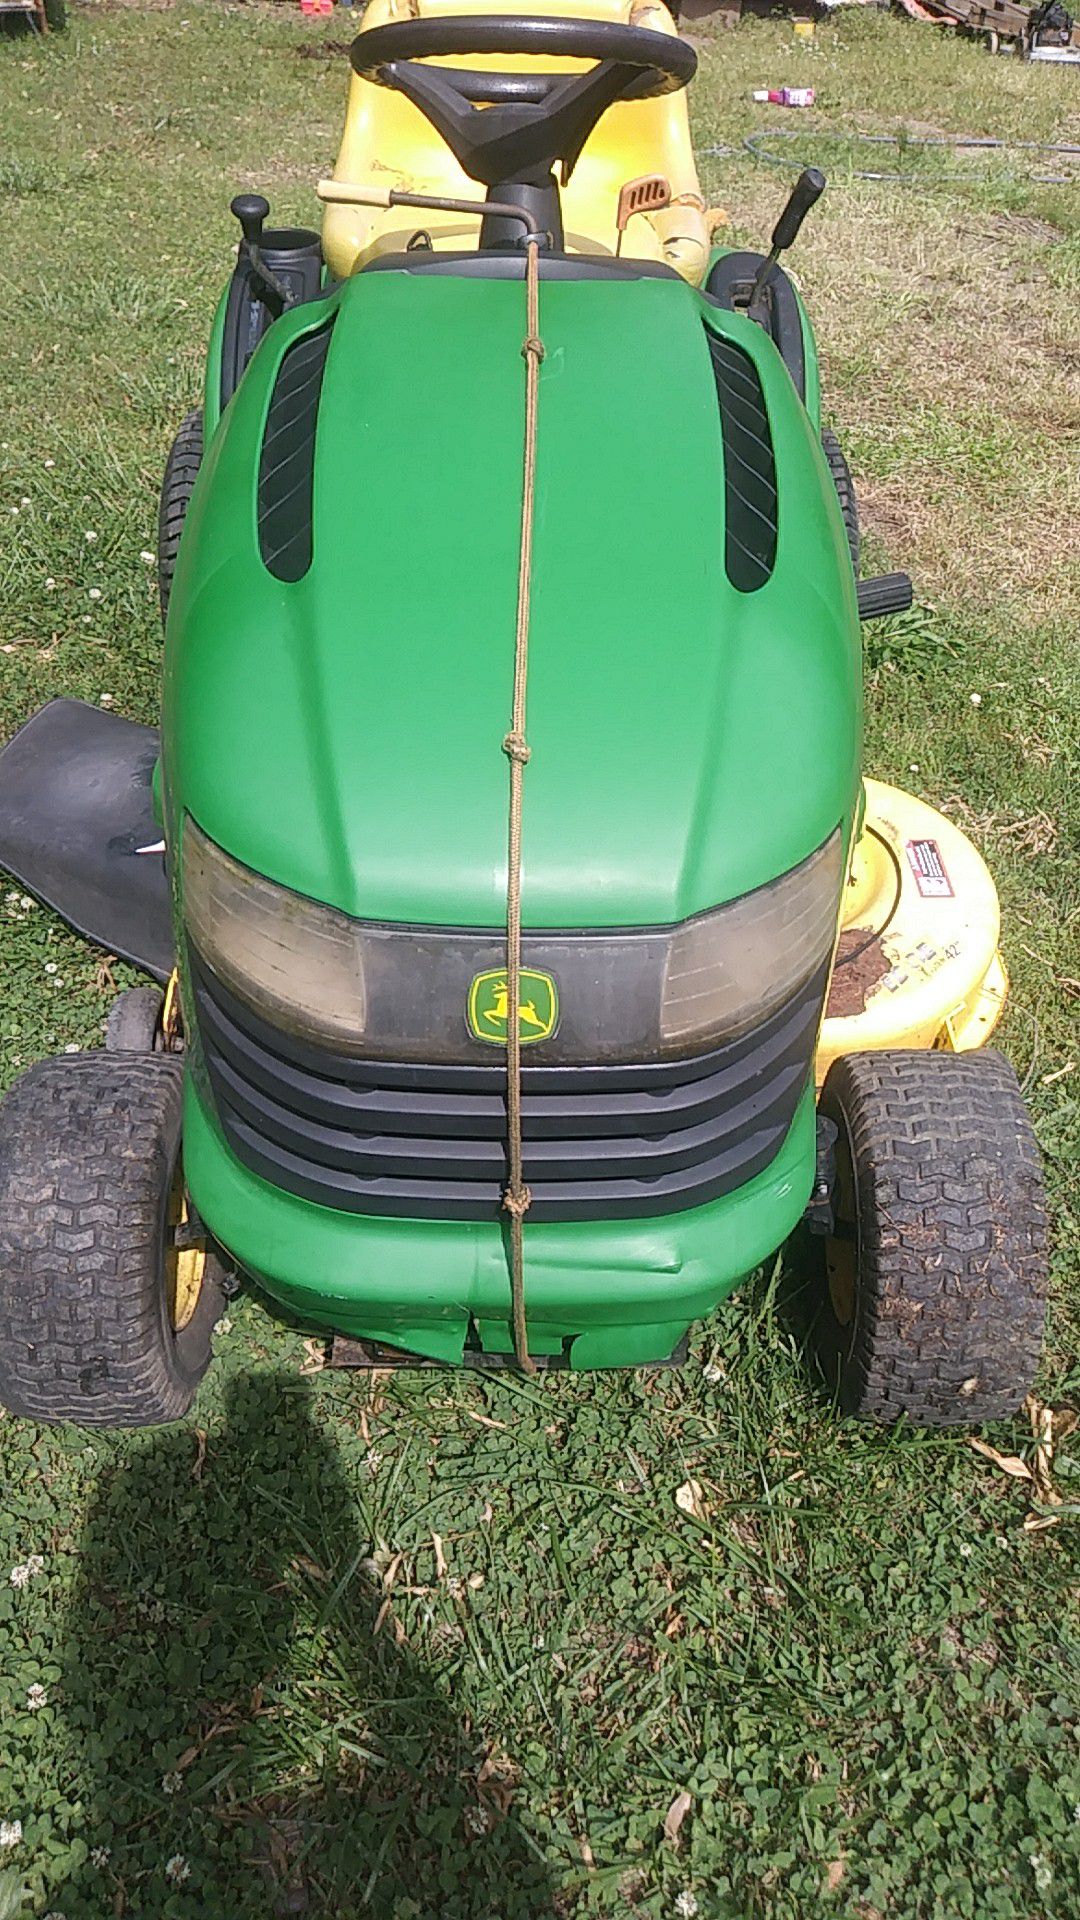 John Deere L100 5-speed riding lawn mower for Sale in Gastonia, NC ...